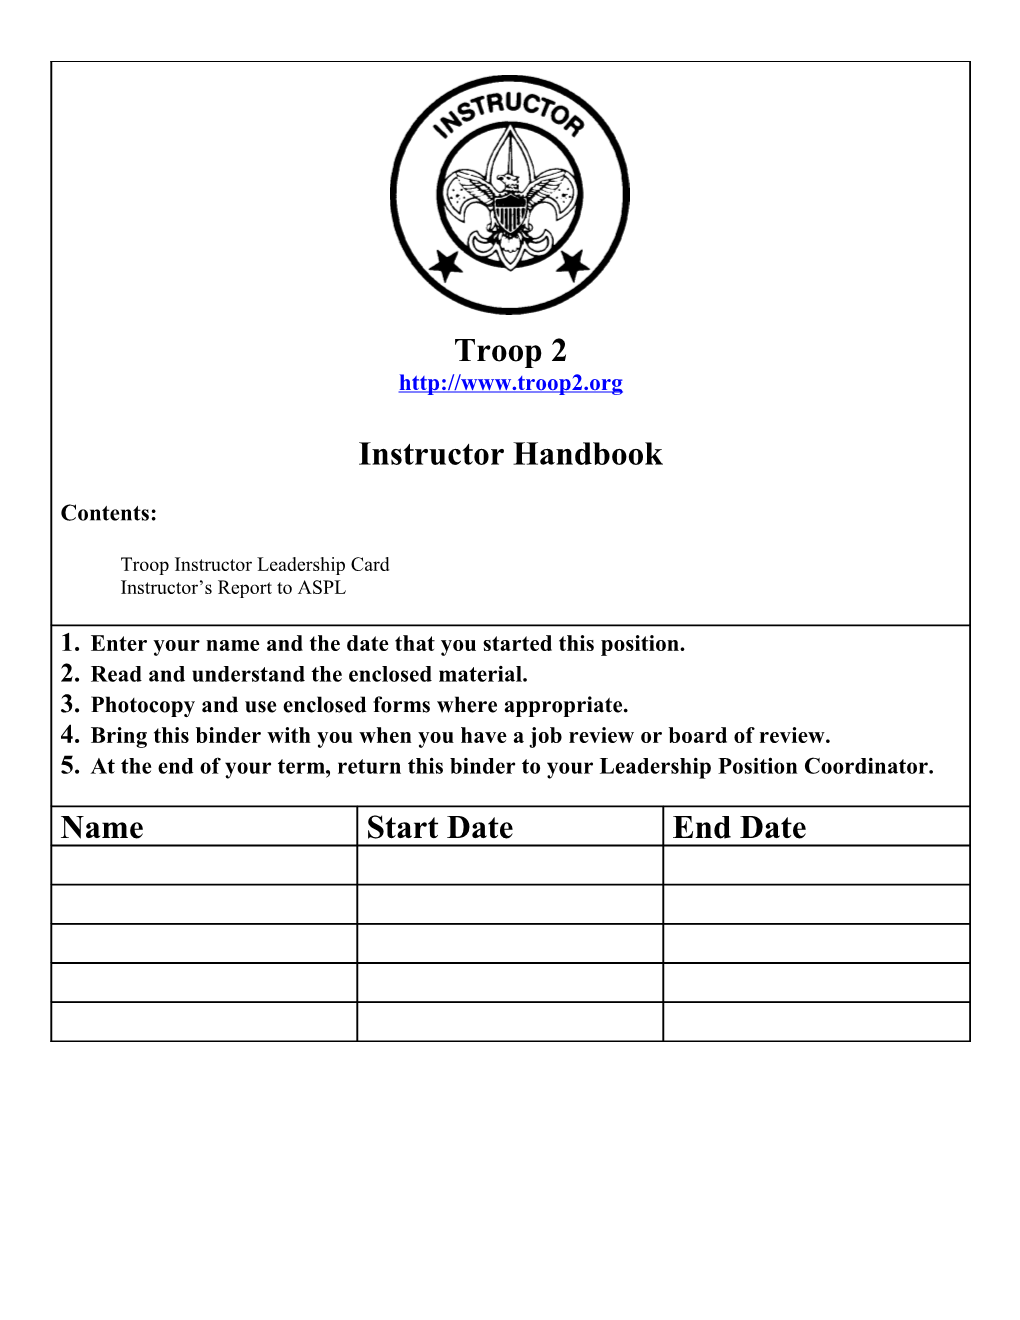 Troop Instructor Handbook